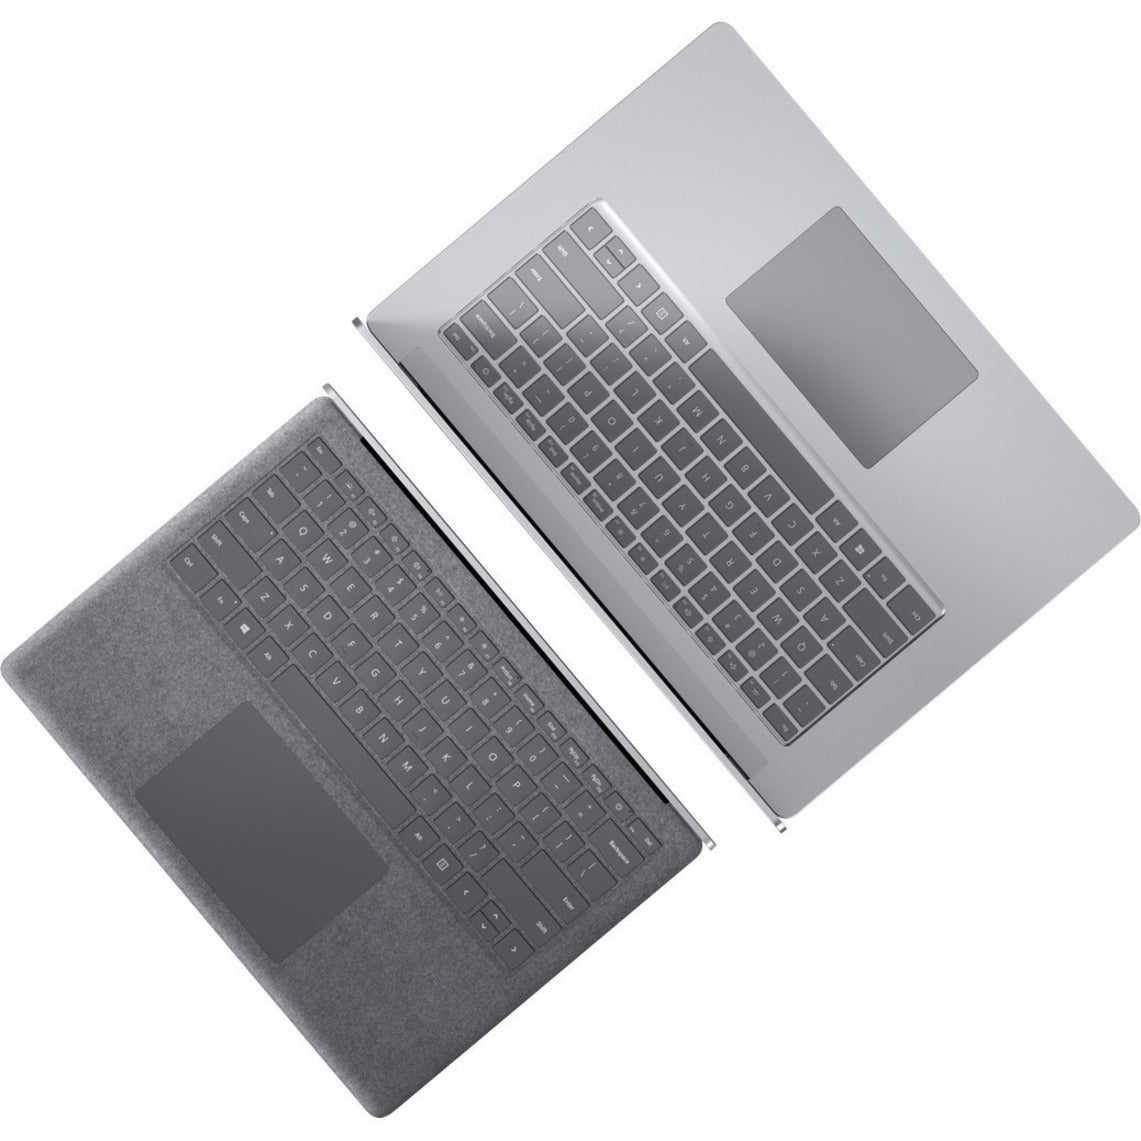 Microsoft RE4-00001 Surface Laptop 3 Notebook, 13.5" QHD Touchscreen, Core i5, 8GB RAM, 256GB SSD, Windows 10 Pro